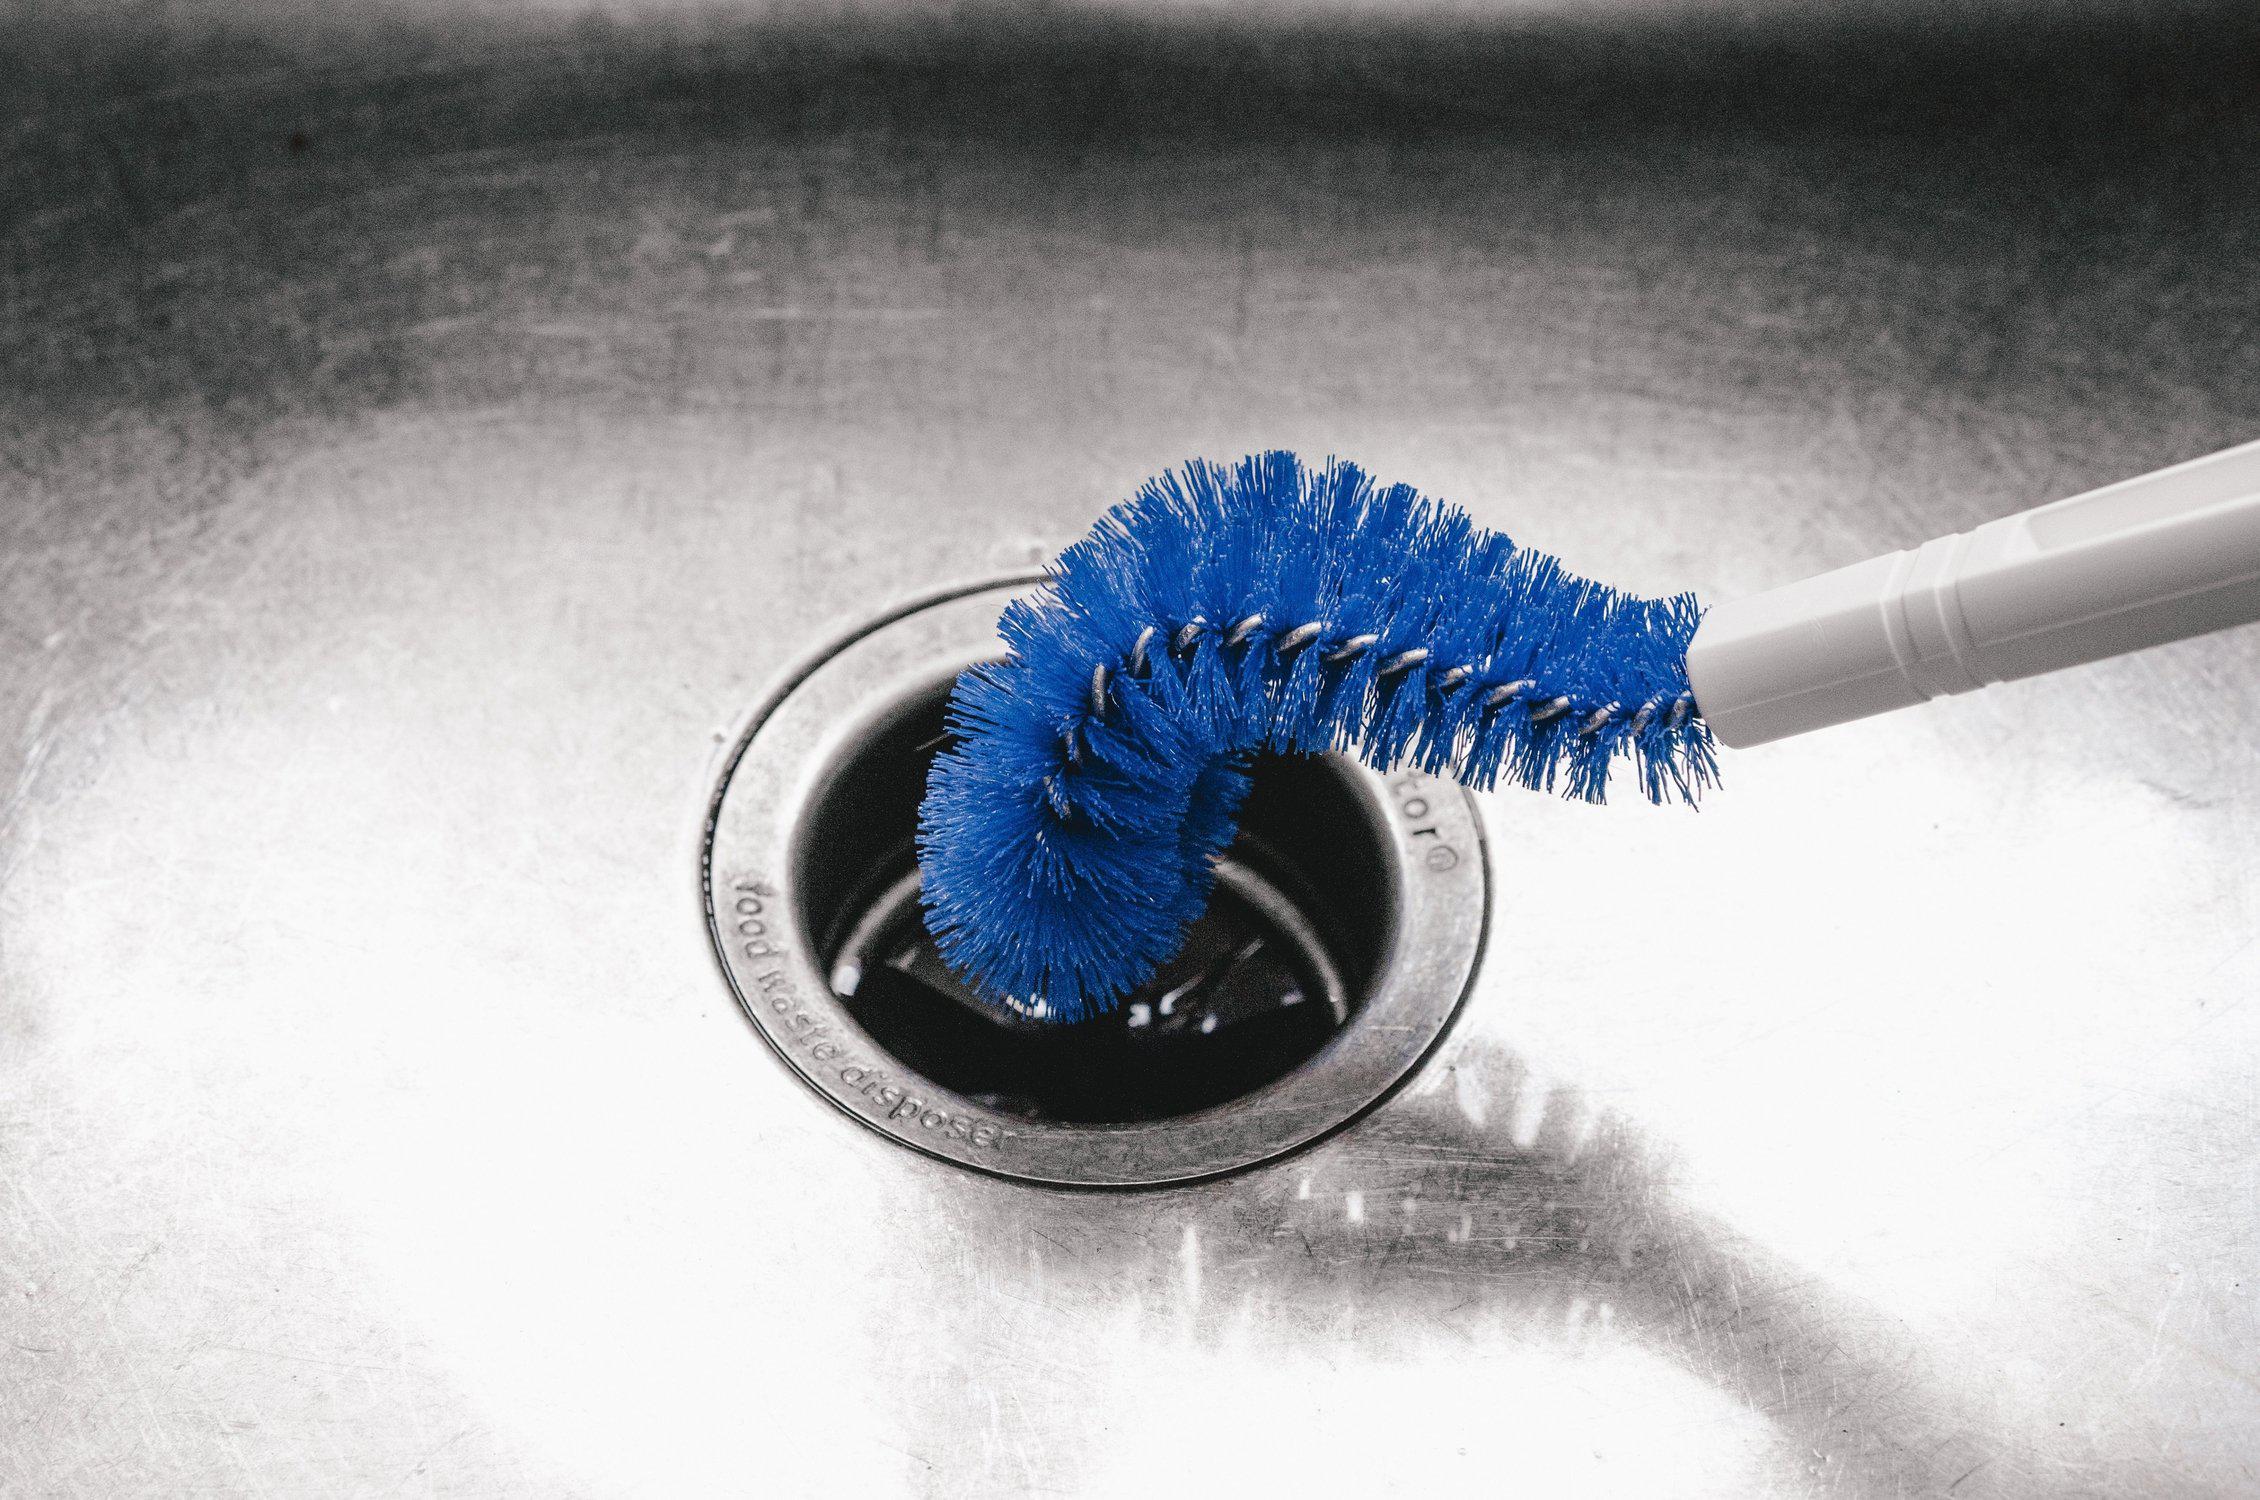 Cepillo de cocina multiusos Fregador de mano de alta resistencia con percha y cerdas rígidas - Cepillos de limpieza - Compañía Fuller Brush